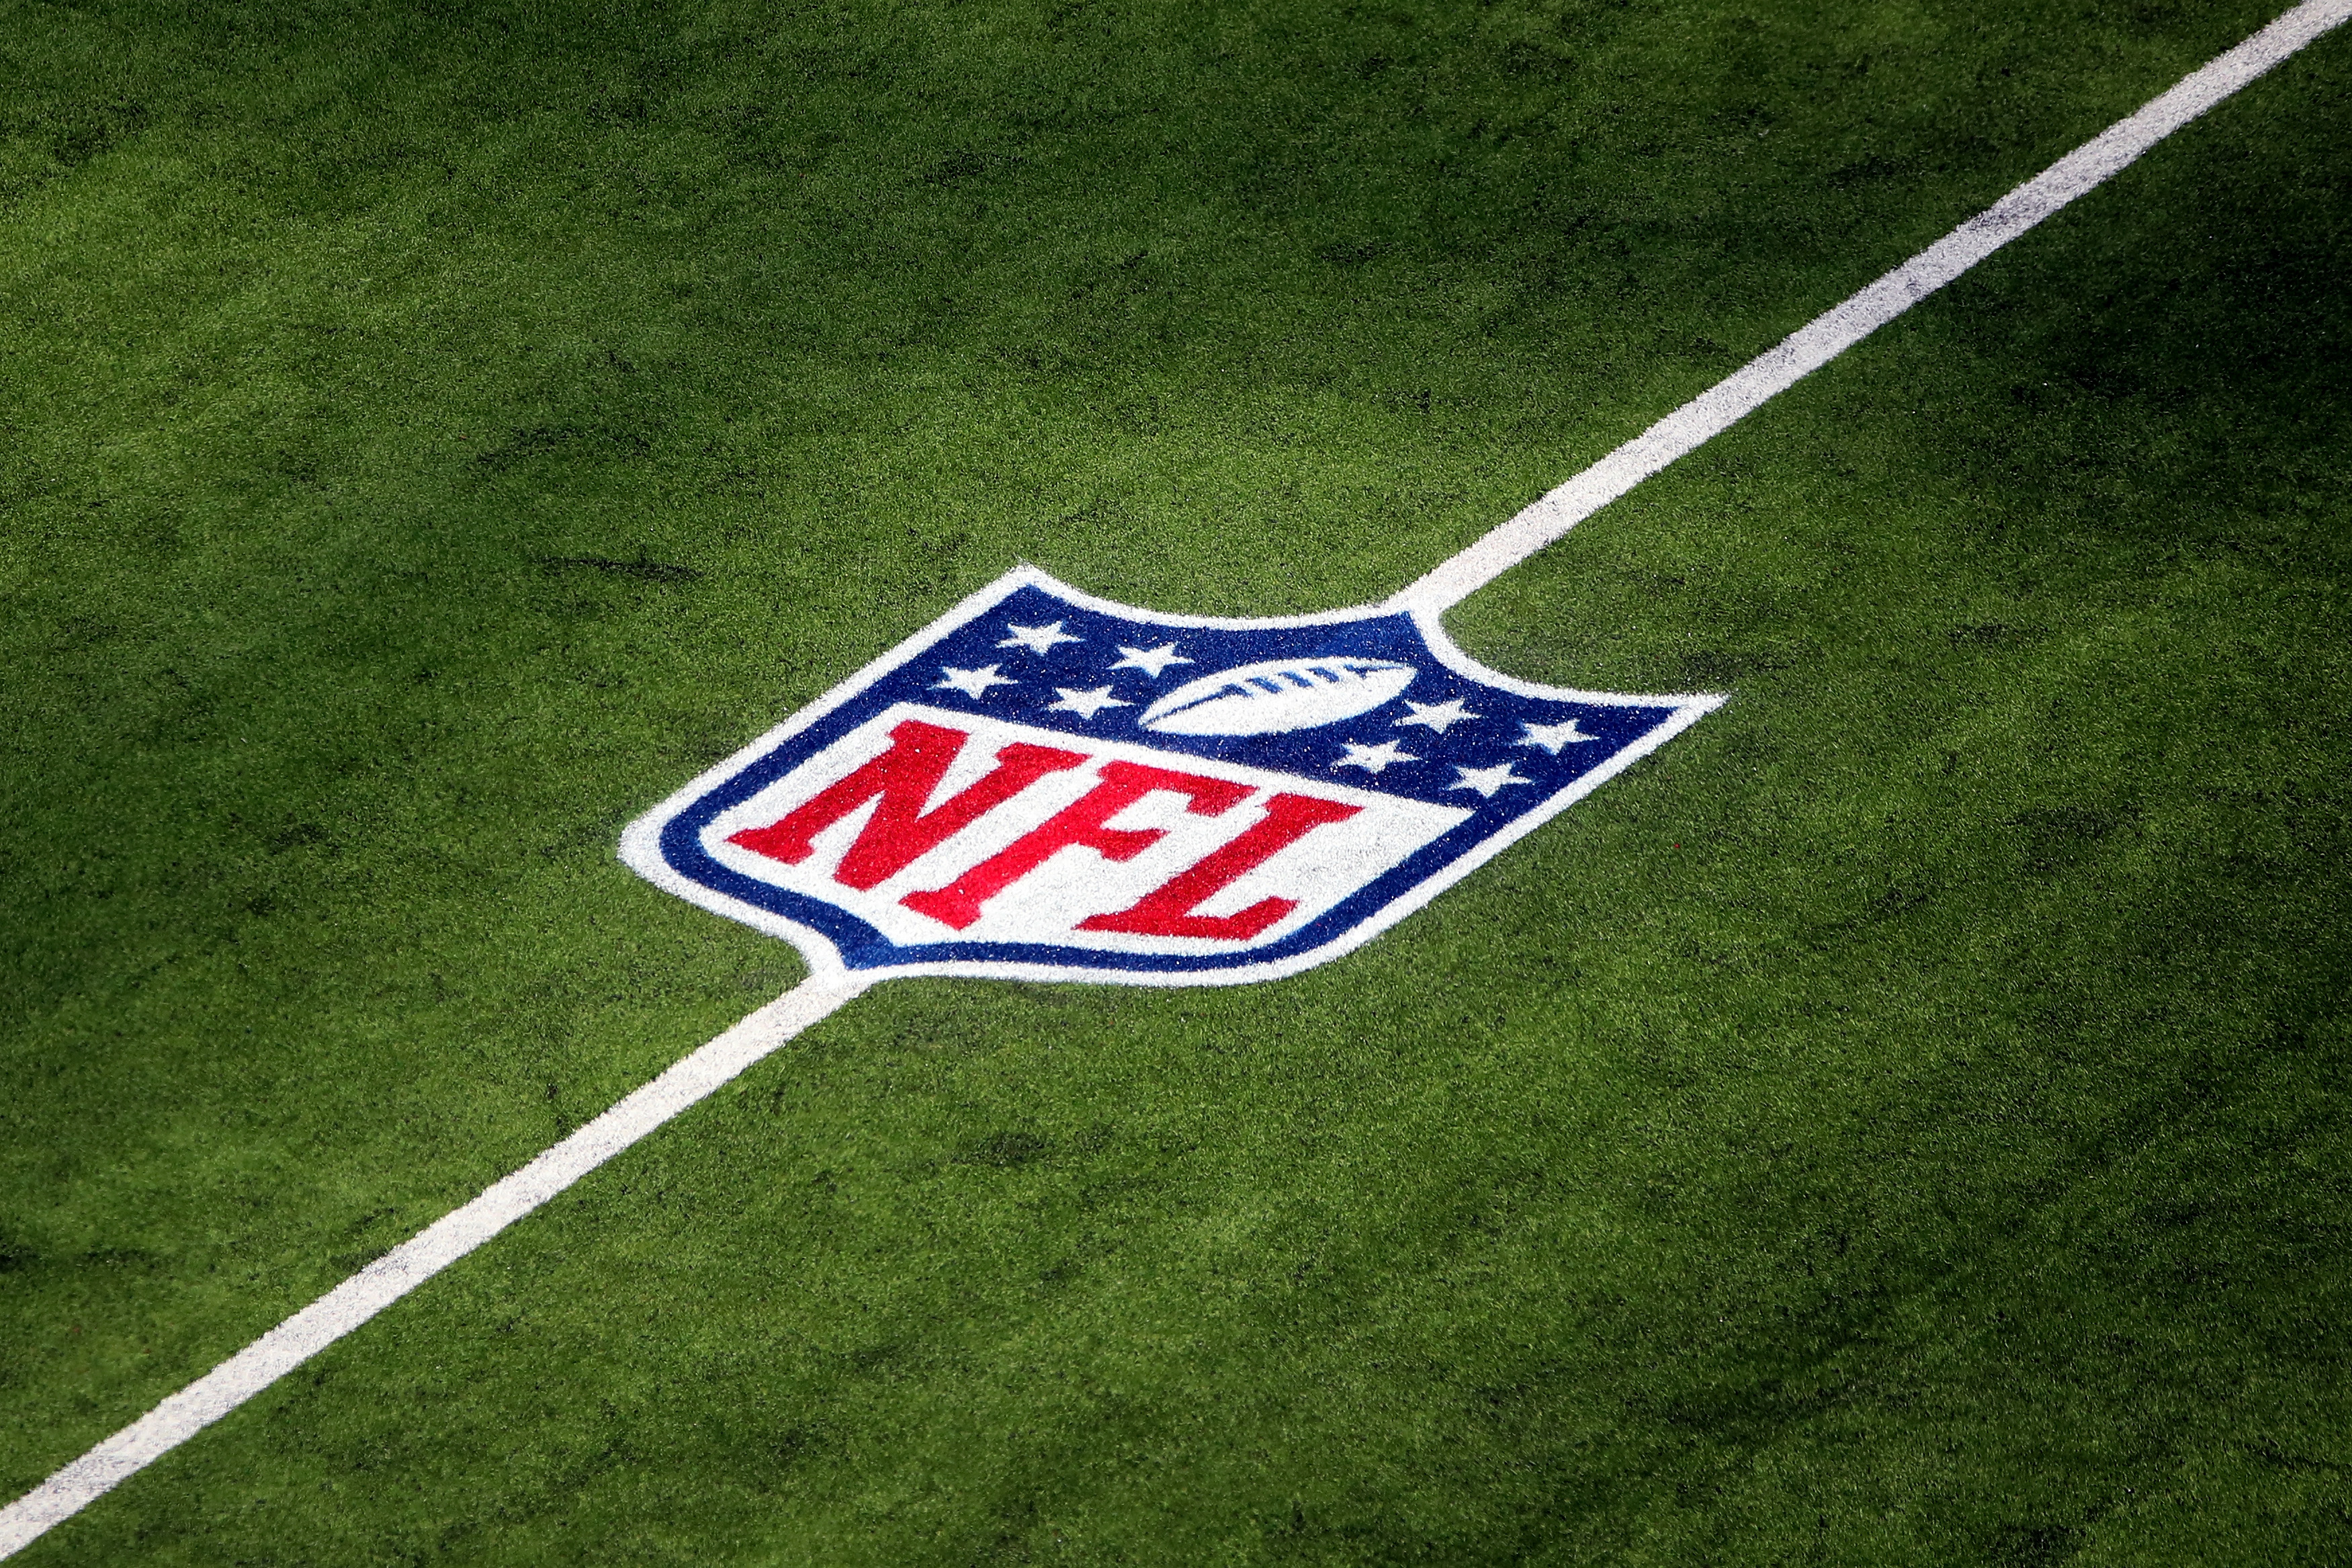 Super Bowl 2022 location: LA Rams set to play Super Bowl 56 at home stadium  - DraftKings Network